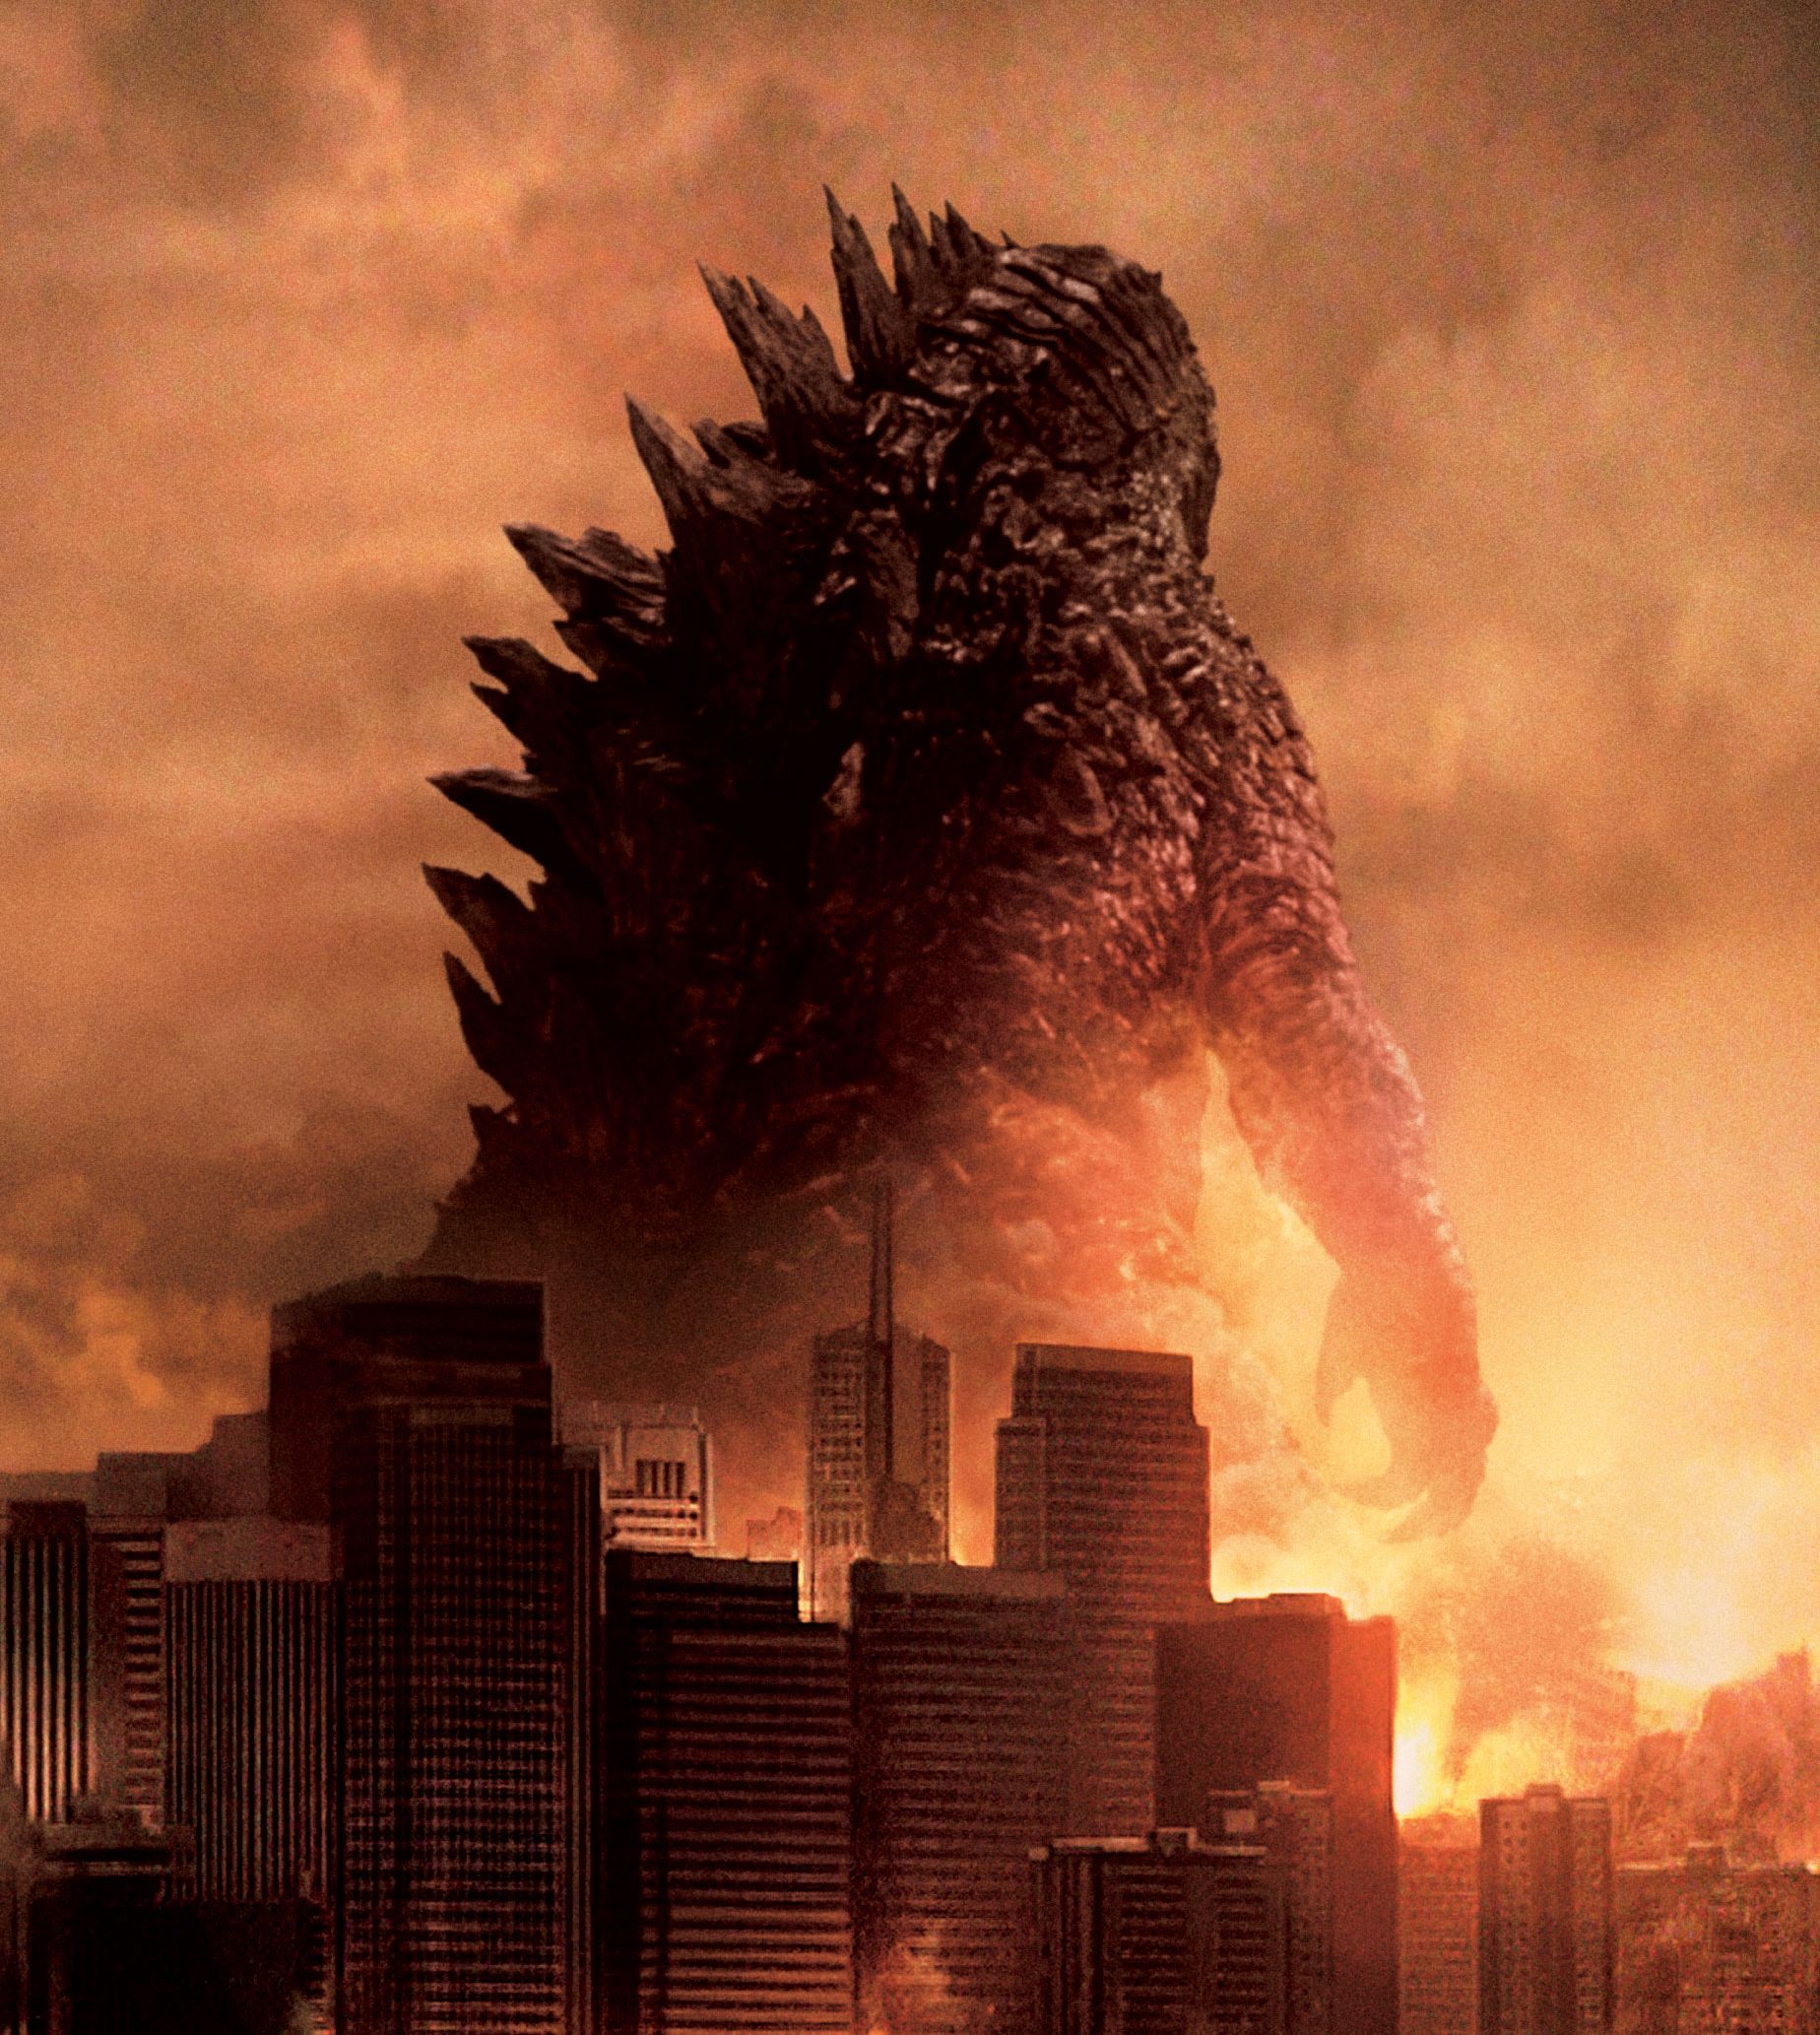 Godzilla close-up in the city